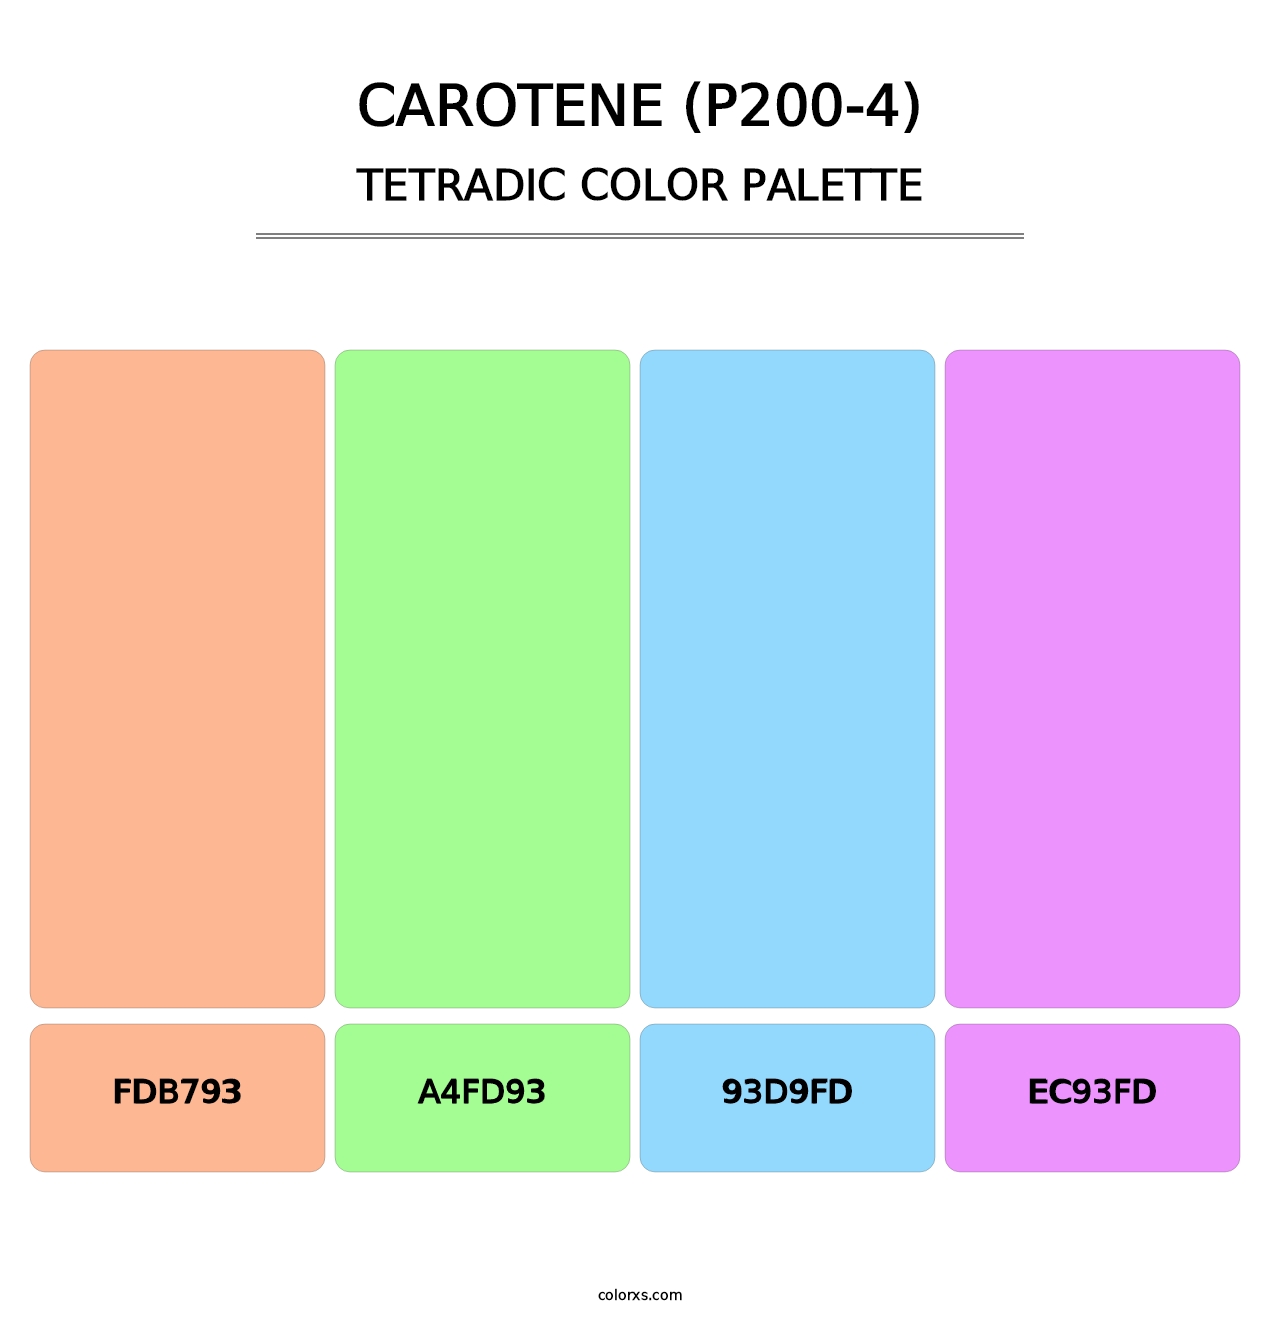 Carotene (P200-4) - Tetradic Color Palette